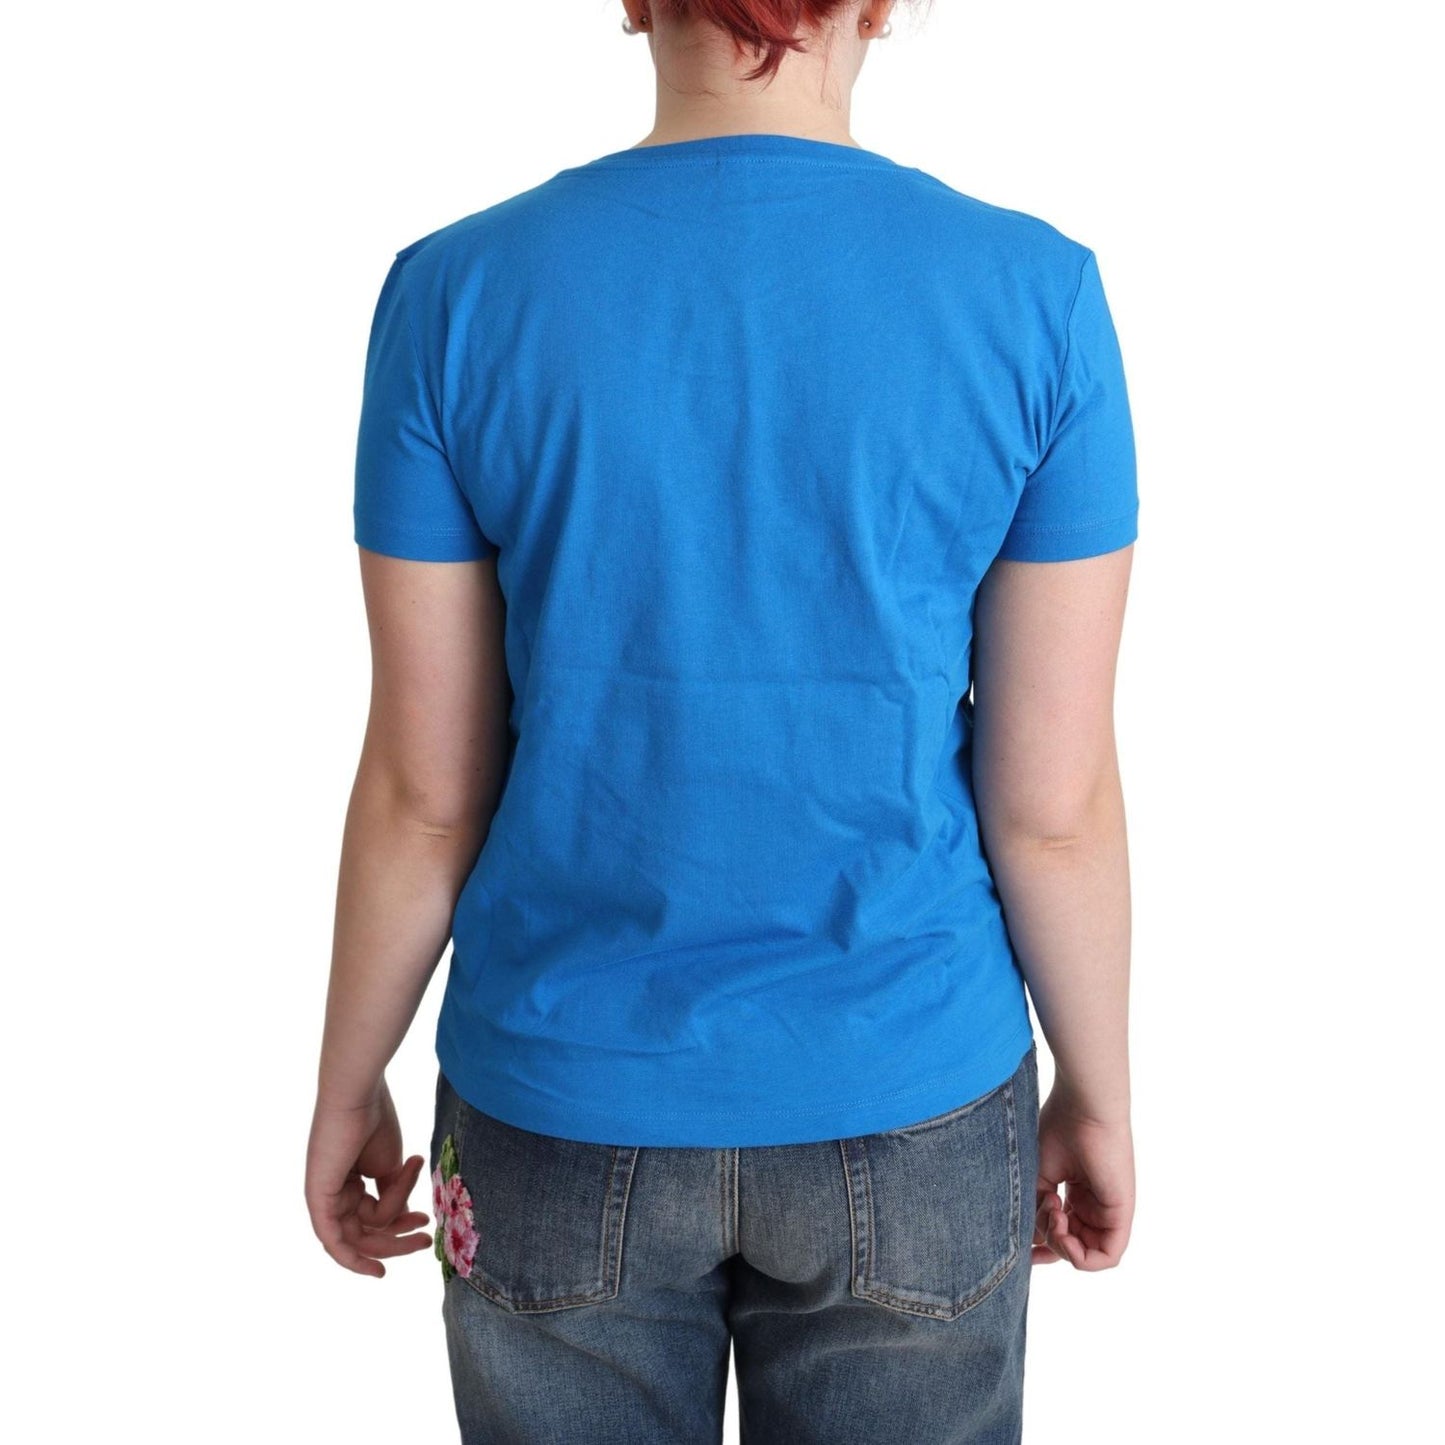 Moschino Chic Triangle Graphic Cotton Tee blue-cotton-swim-graphic-triangle-t-shirt